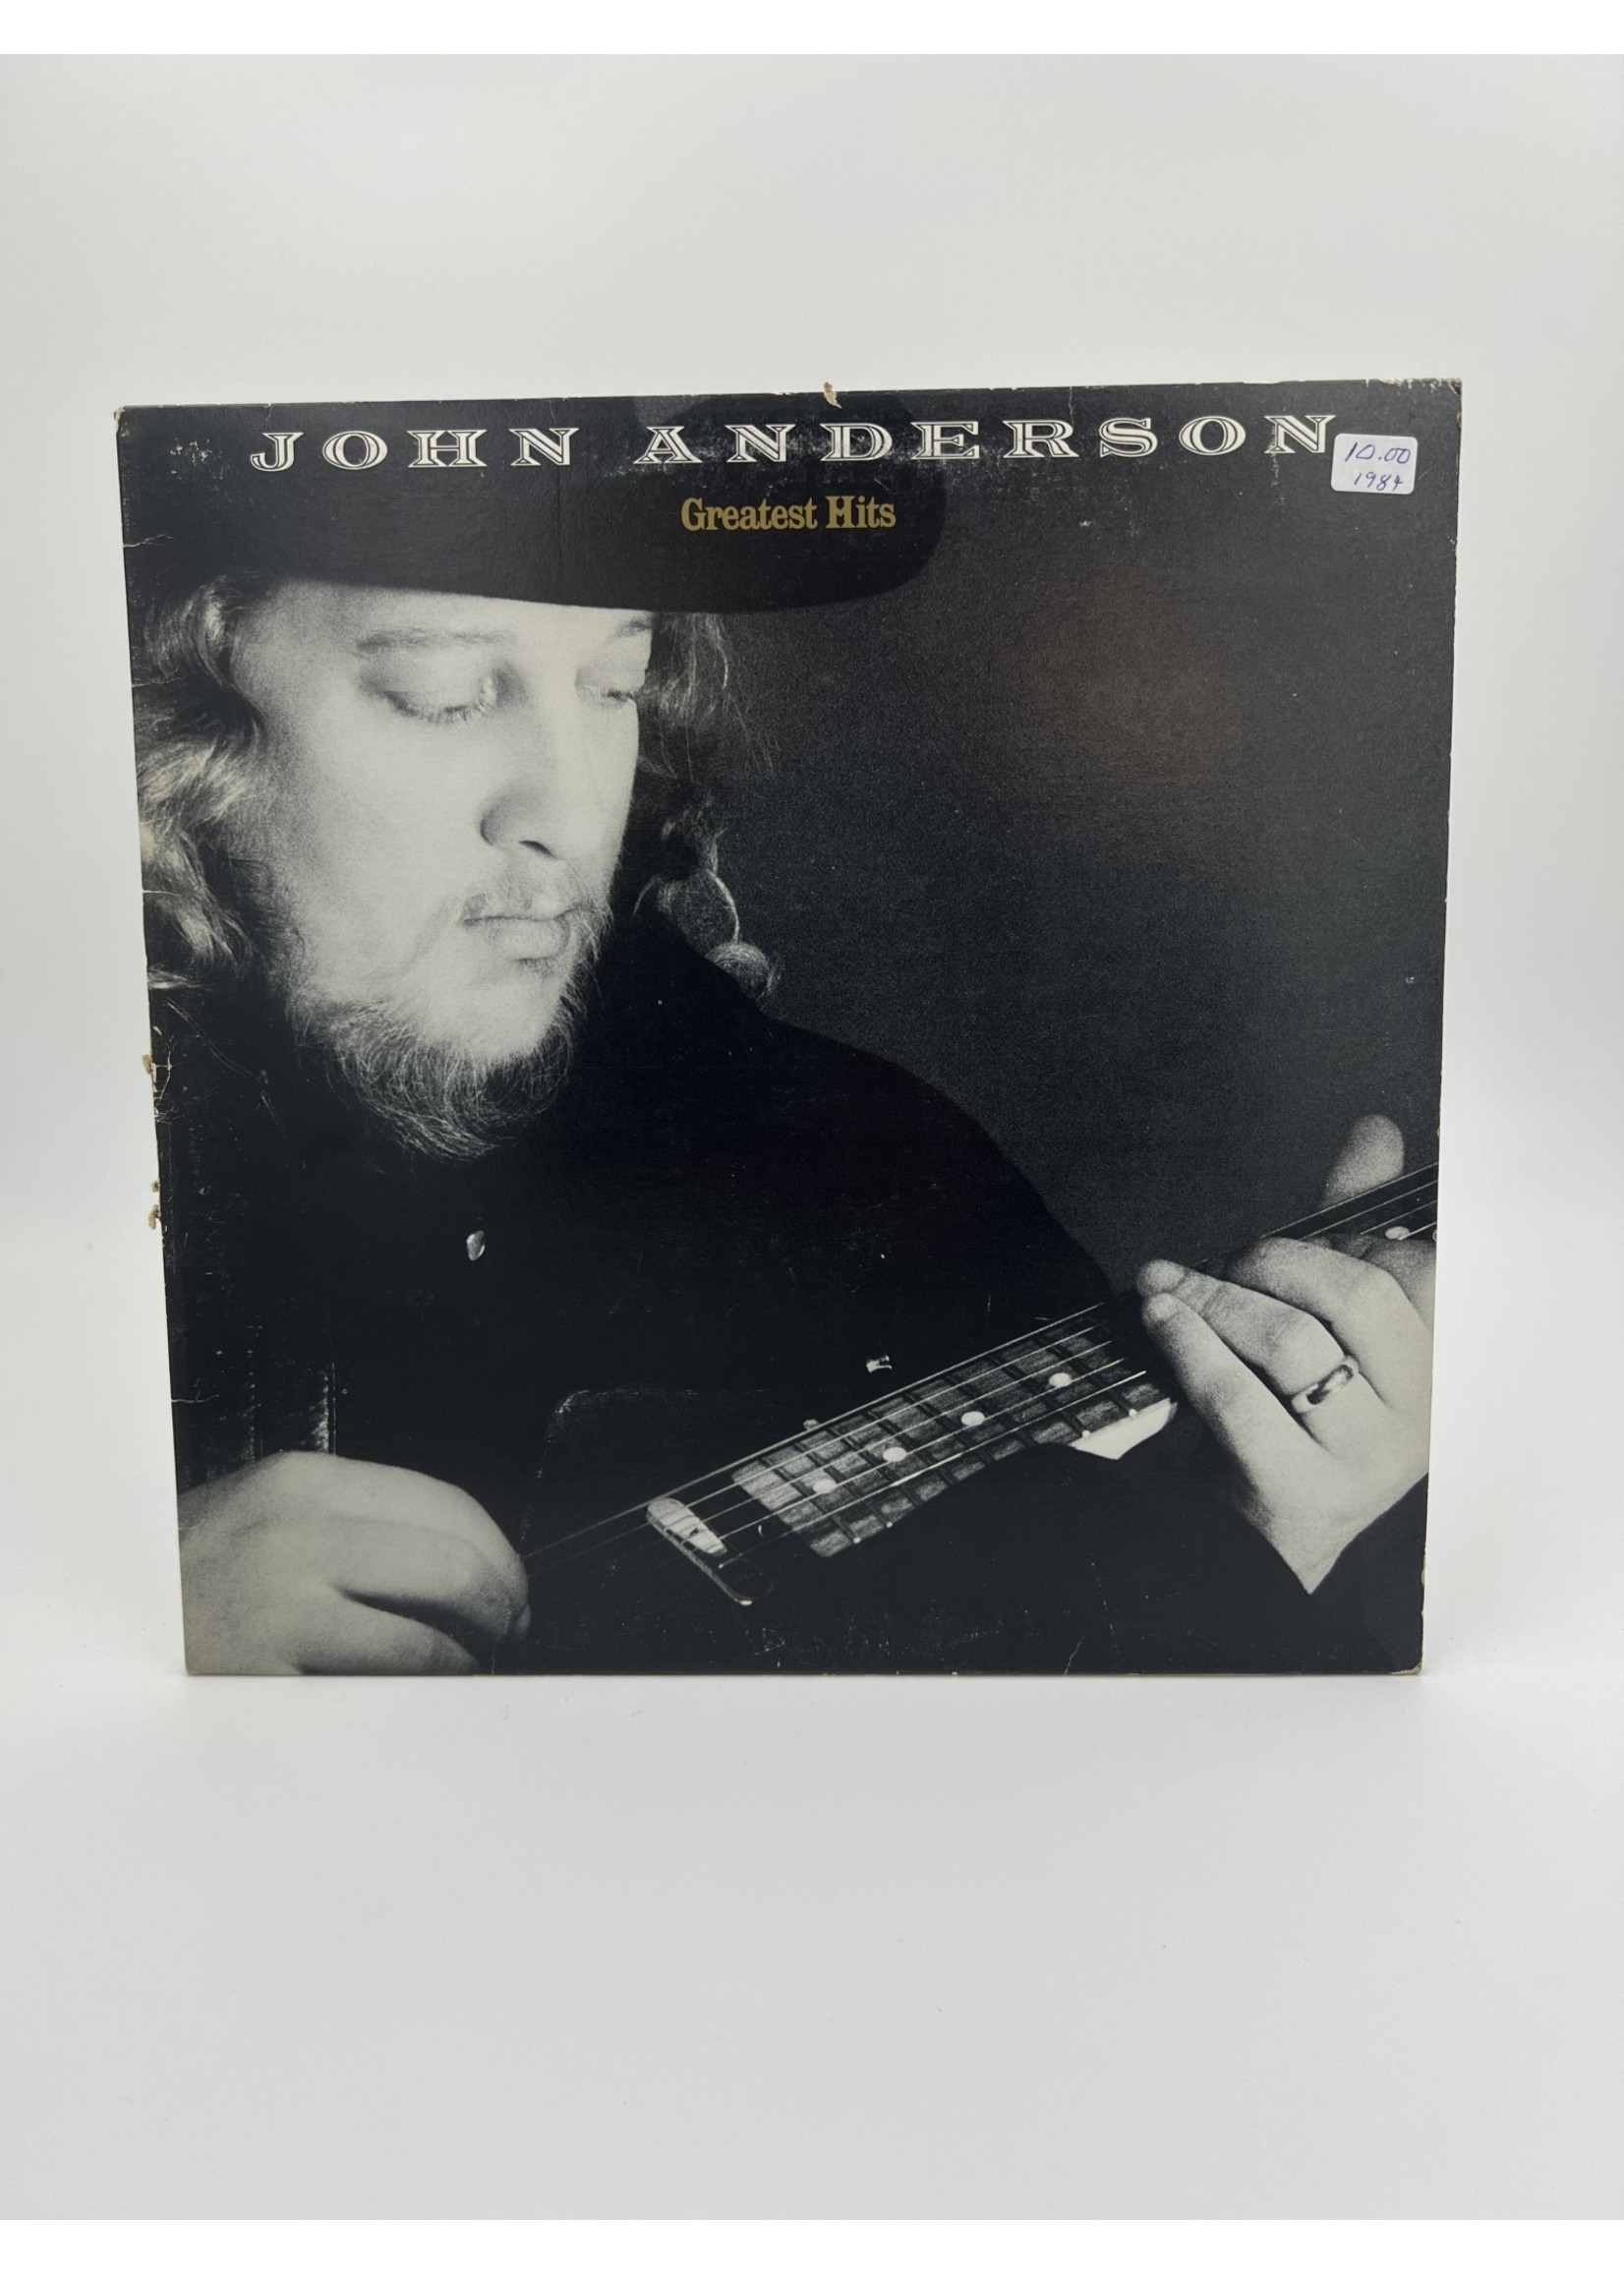 LP John Anderson Greatest Hits Lp Record